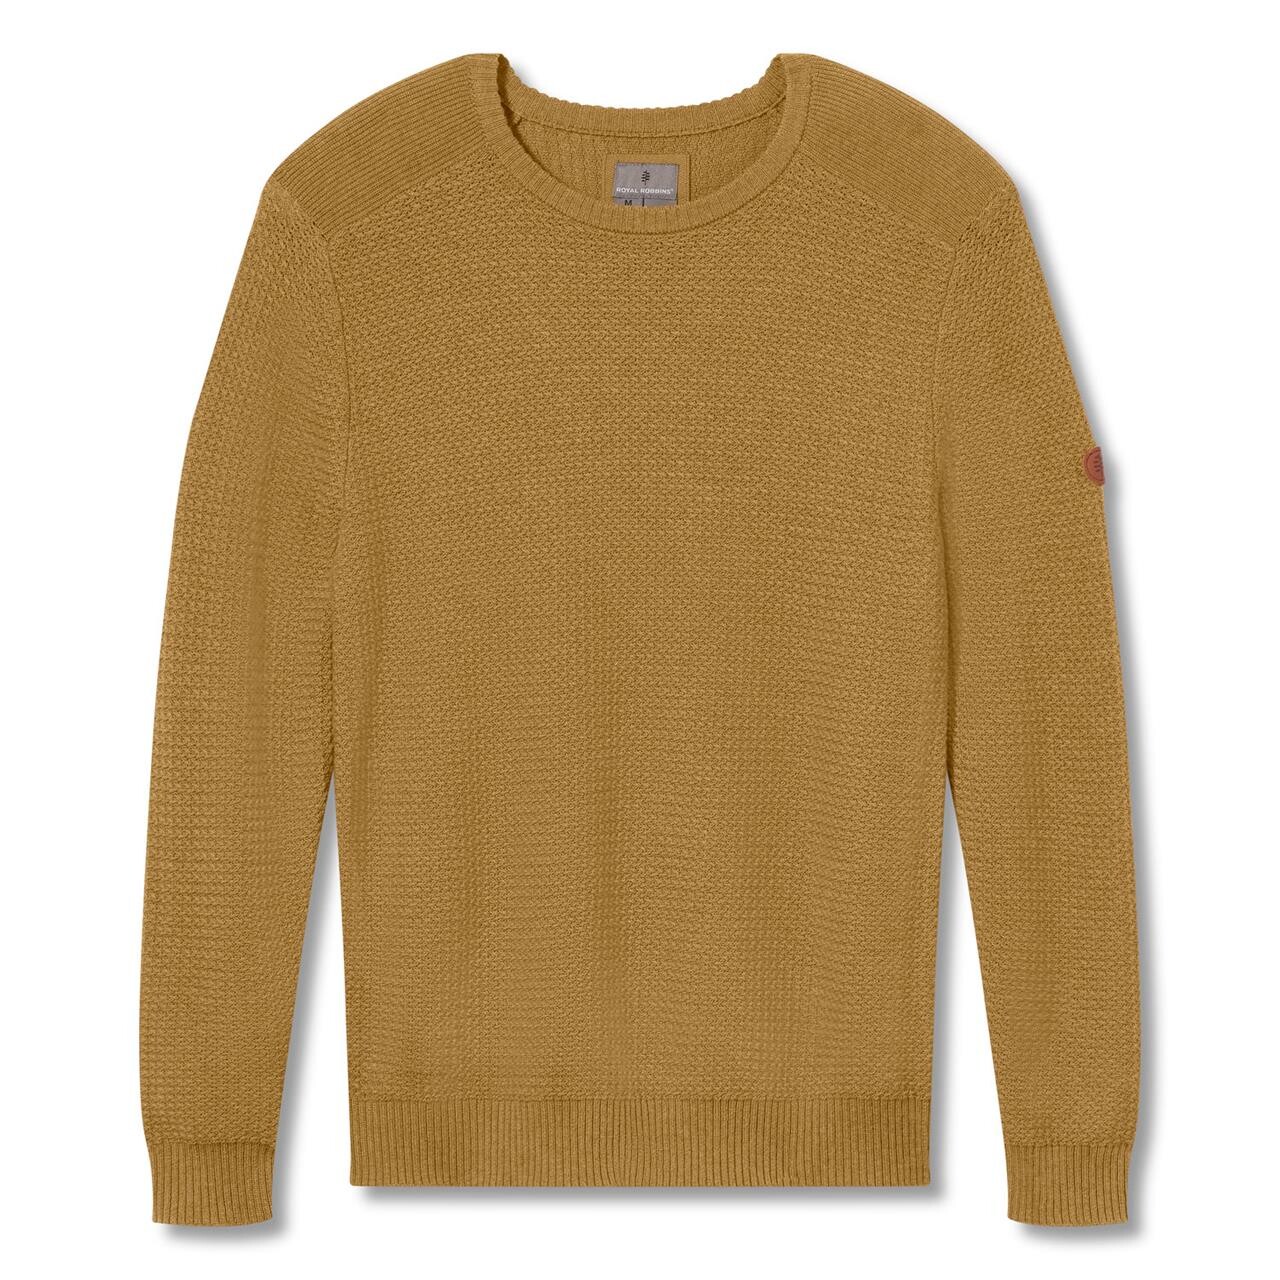 #2 - Royal Robbins Mens All Season Merino Sweater  (Brun (WOOD THRUSH) Small)